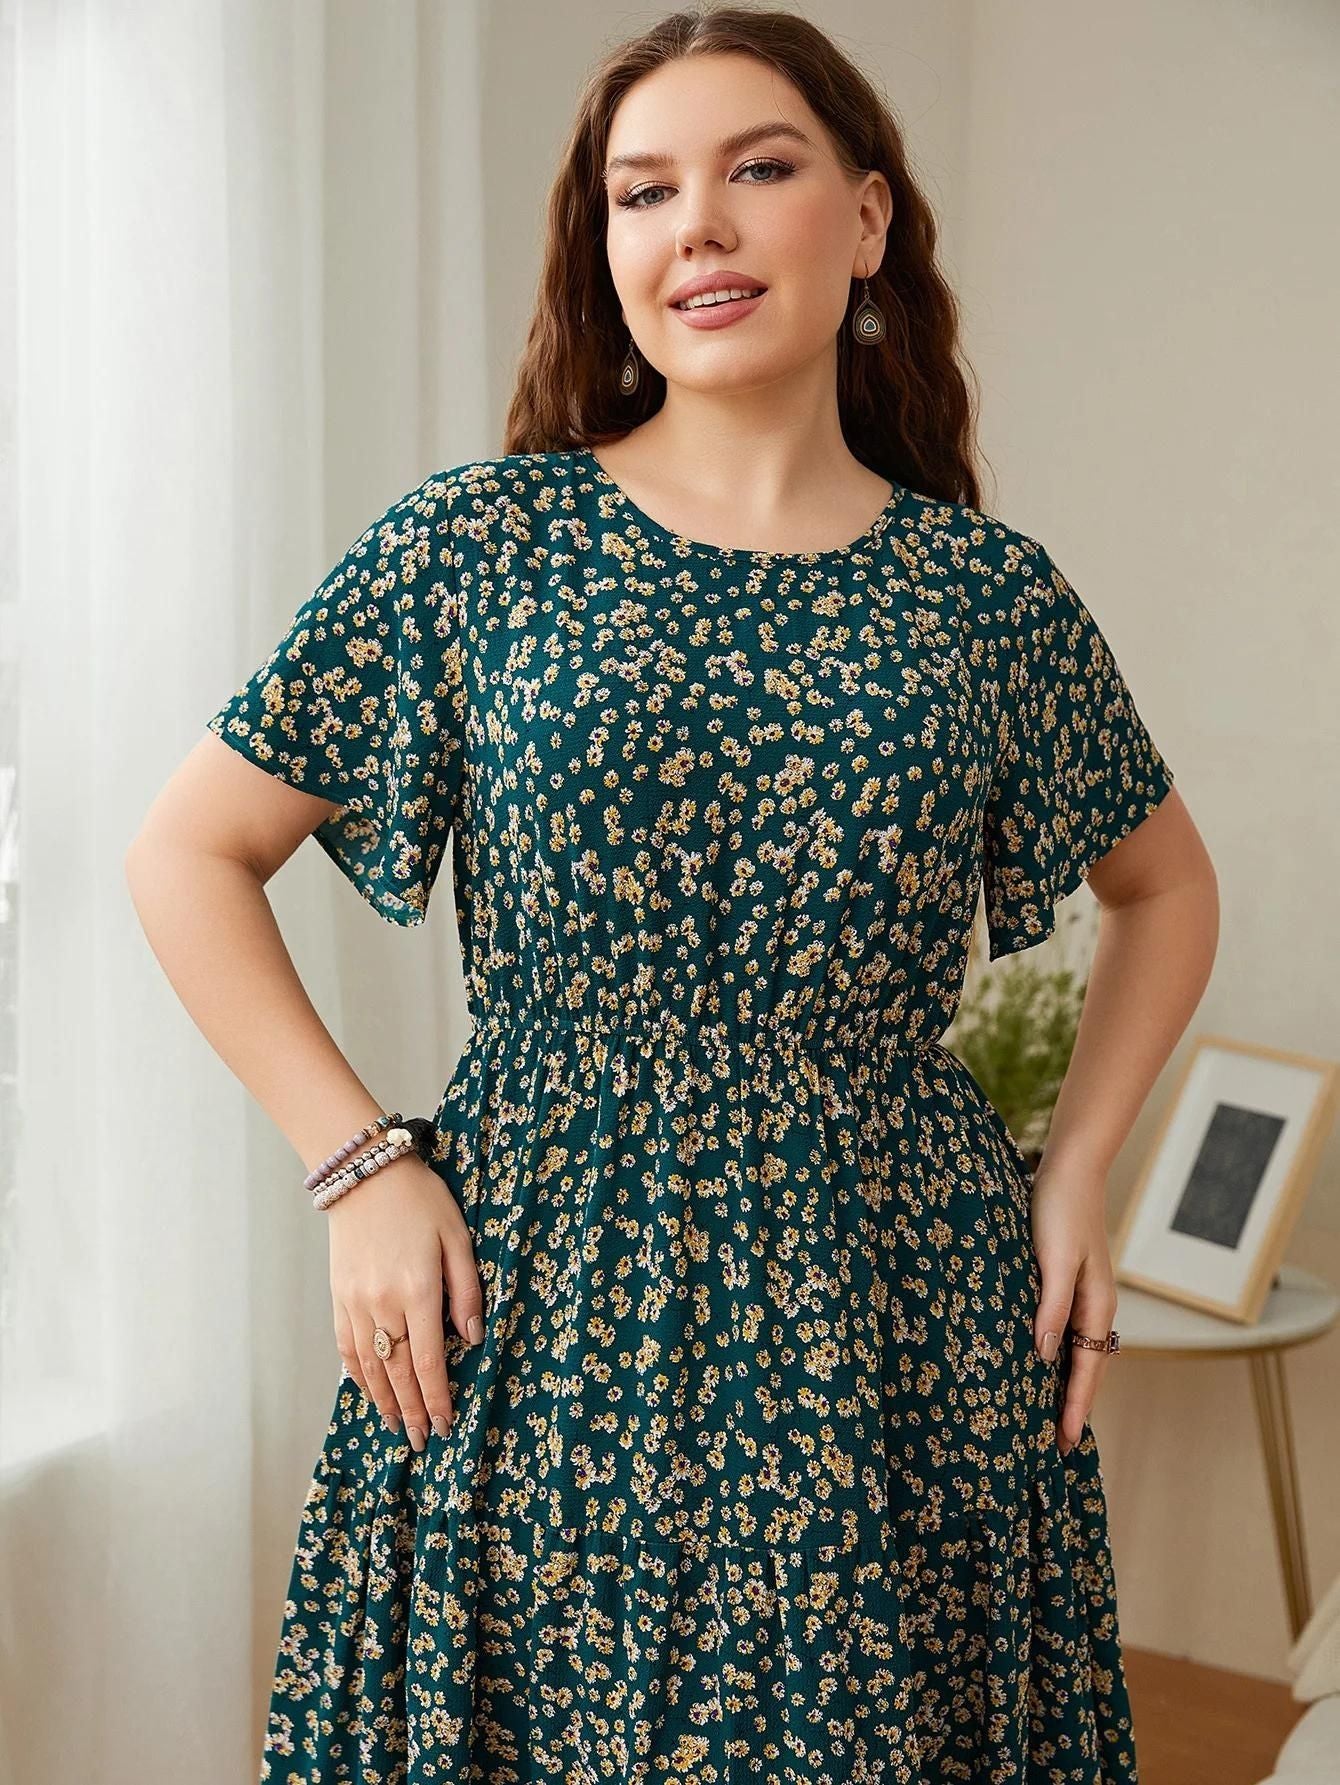 Elegant summer dress with floral pattern, slimming effect